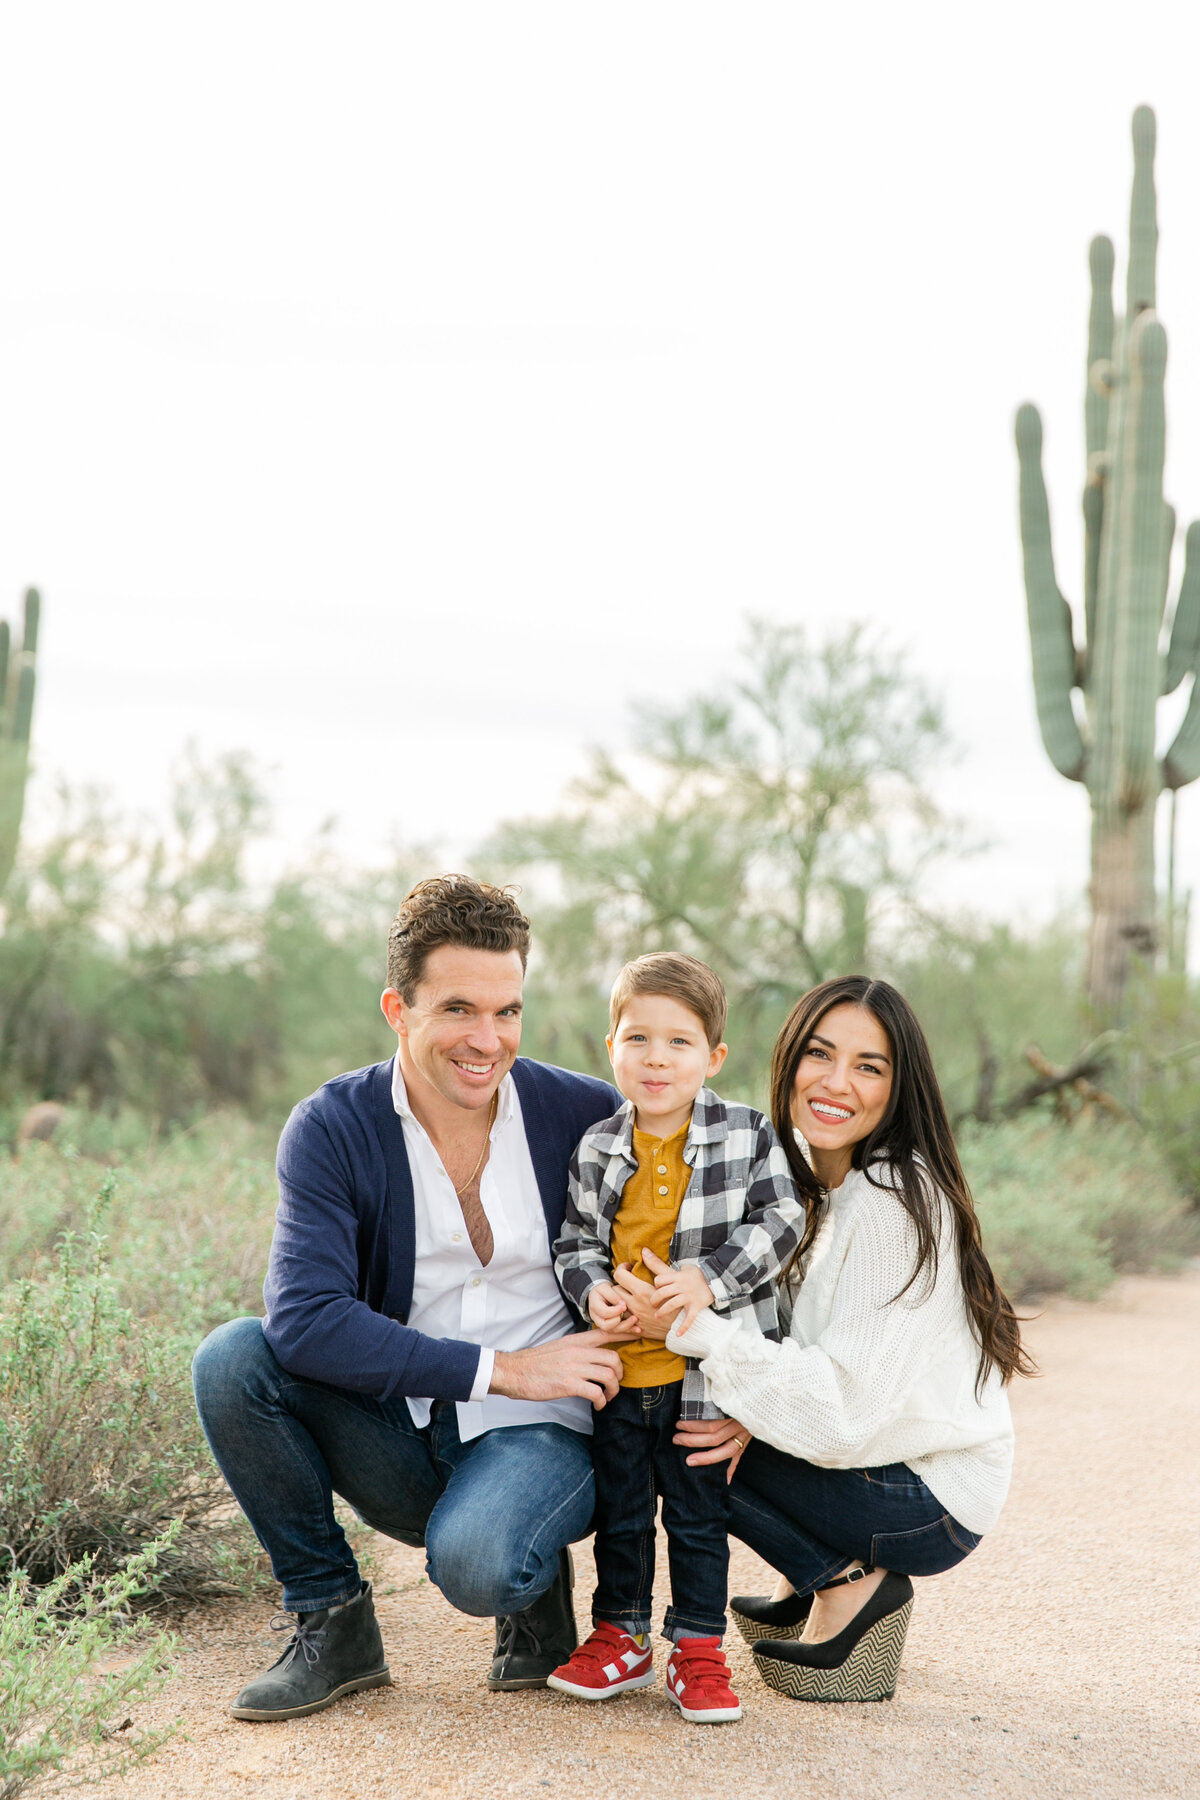 Karlie Colleen Photography - Scottsdale Arizona - Family portraits - Taylor & Family-80